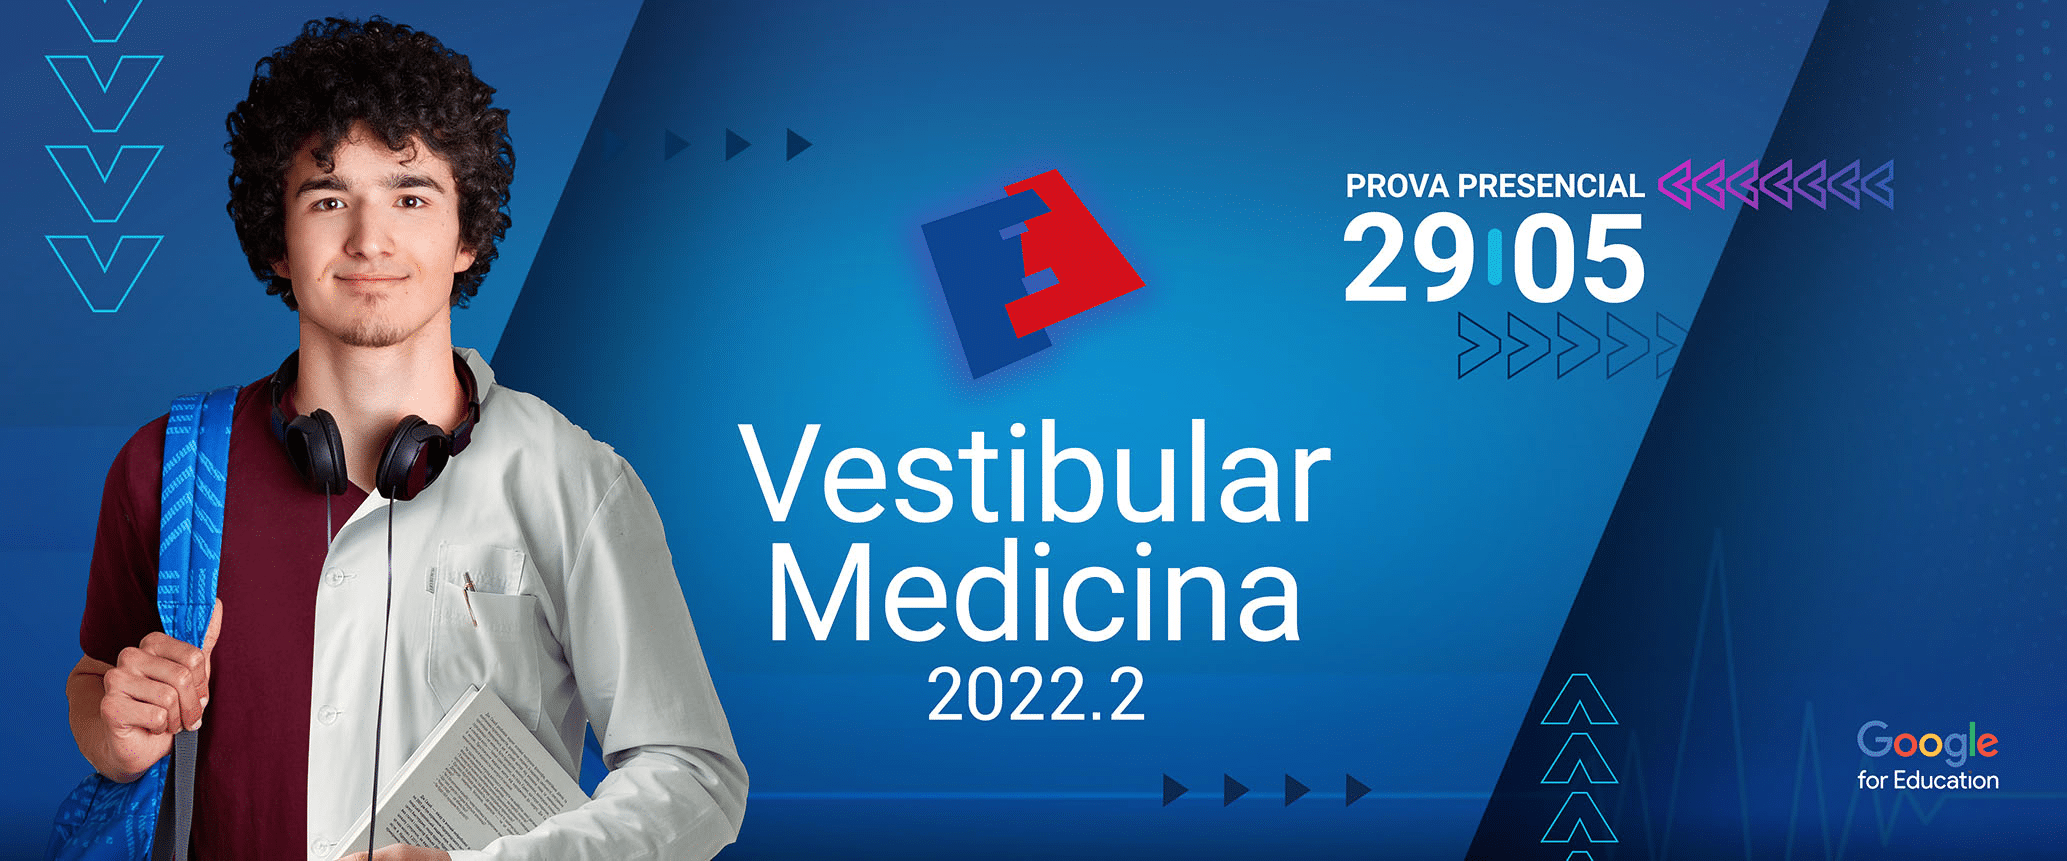 banner_Vestibular-Medicina_2022-2